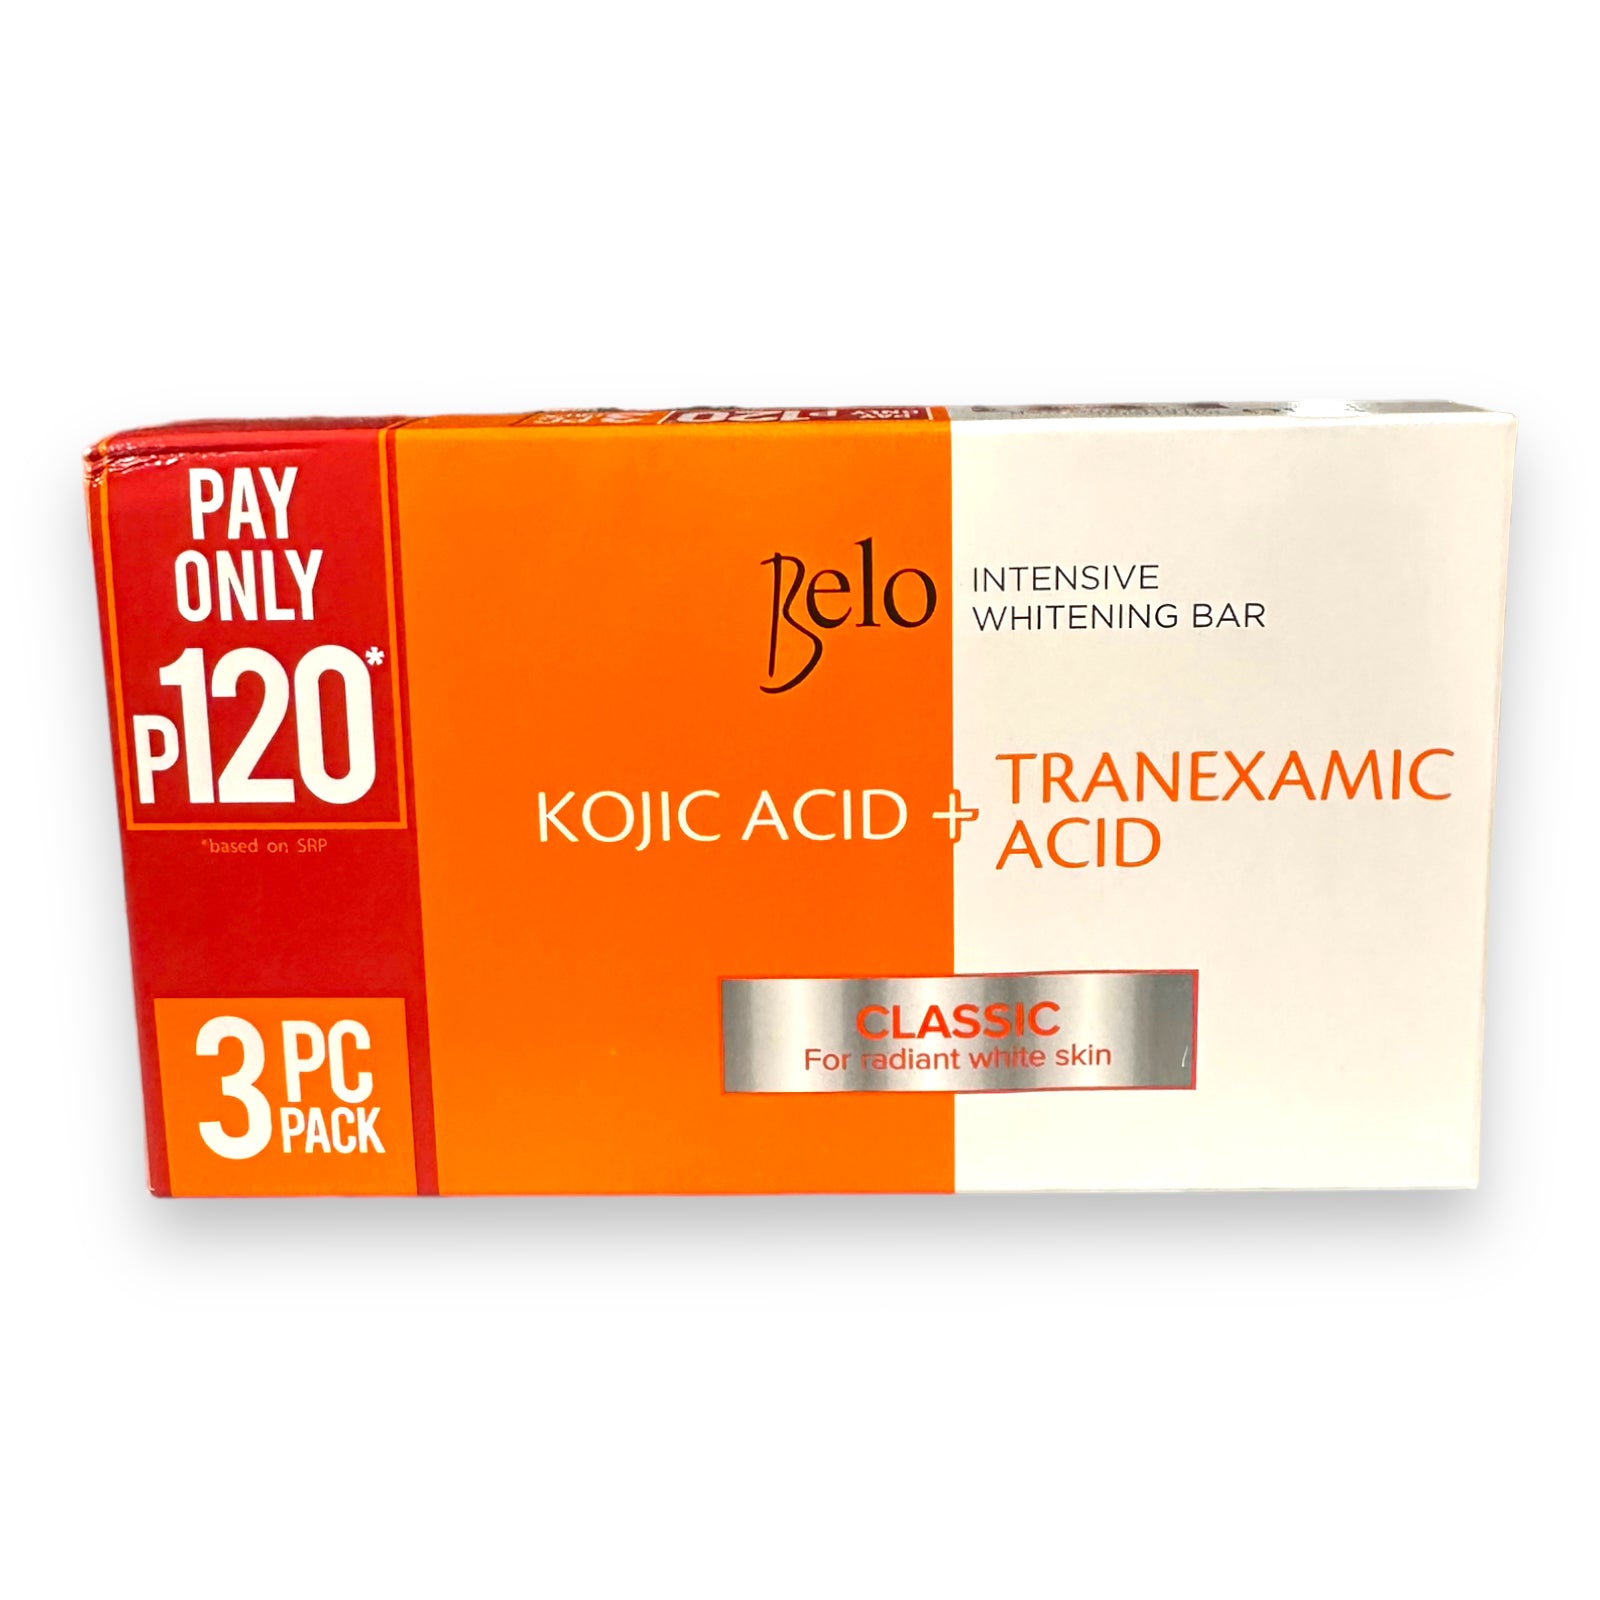 Belo - Intensive Whitening Bar - Kojic Acid + Tranexamic Acid CLASSIC for Radiant White Skin 65g x 3 Bars